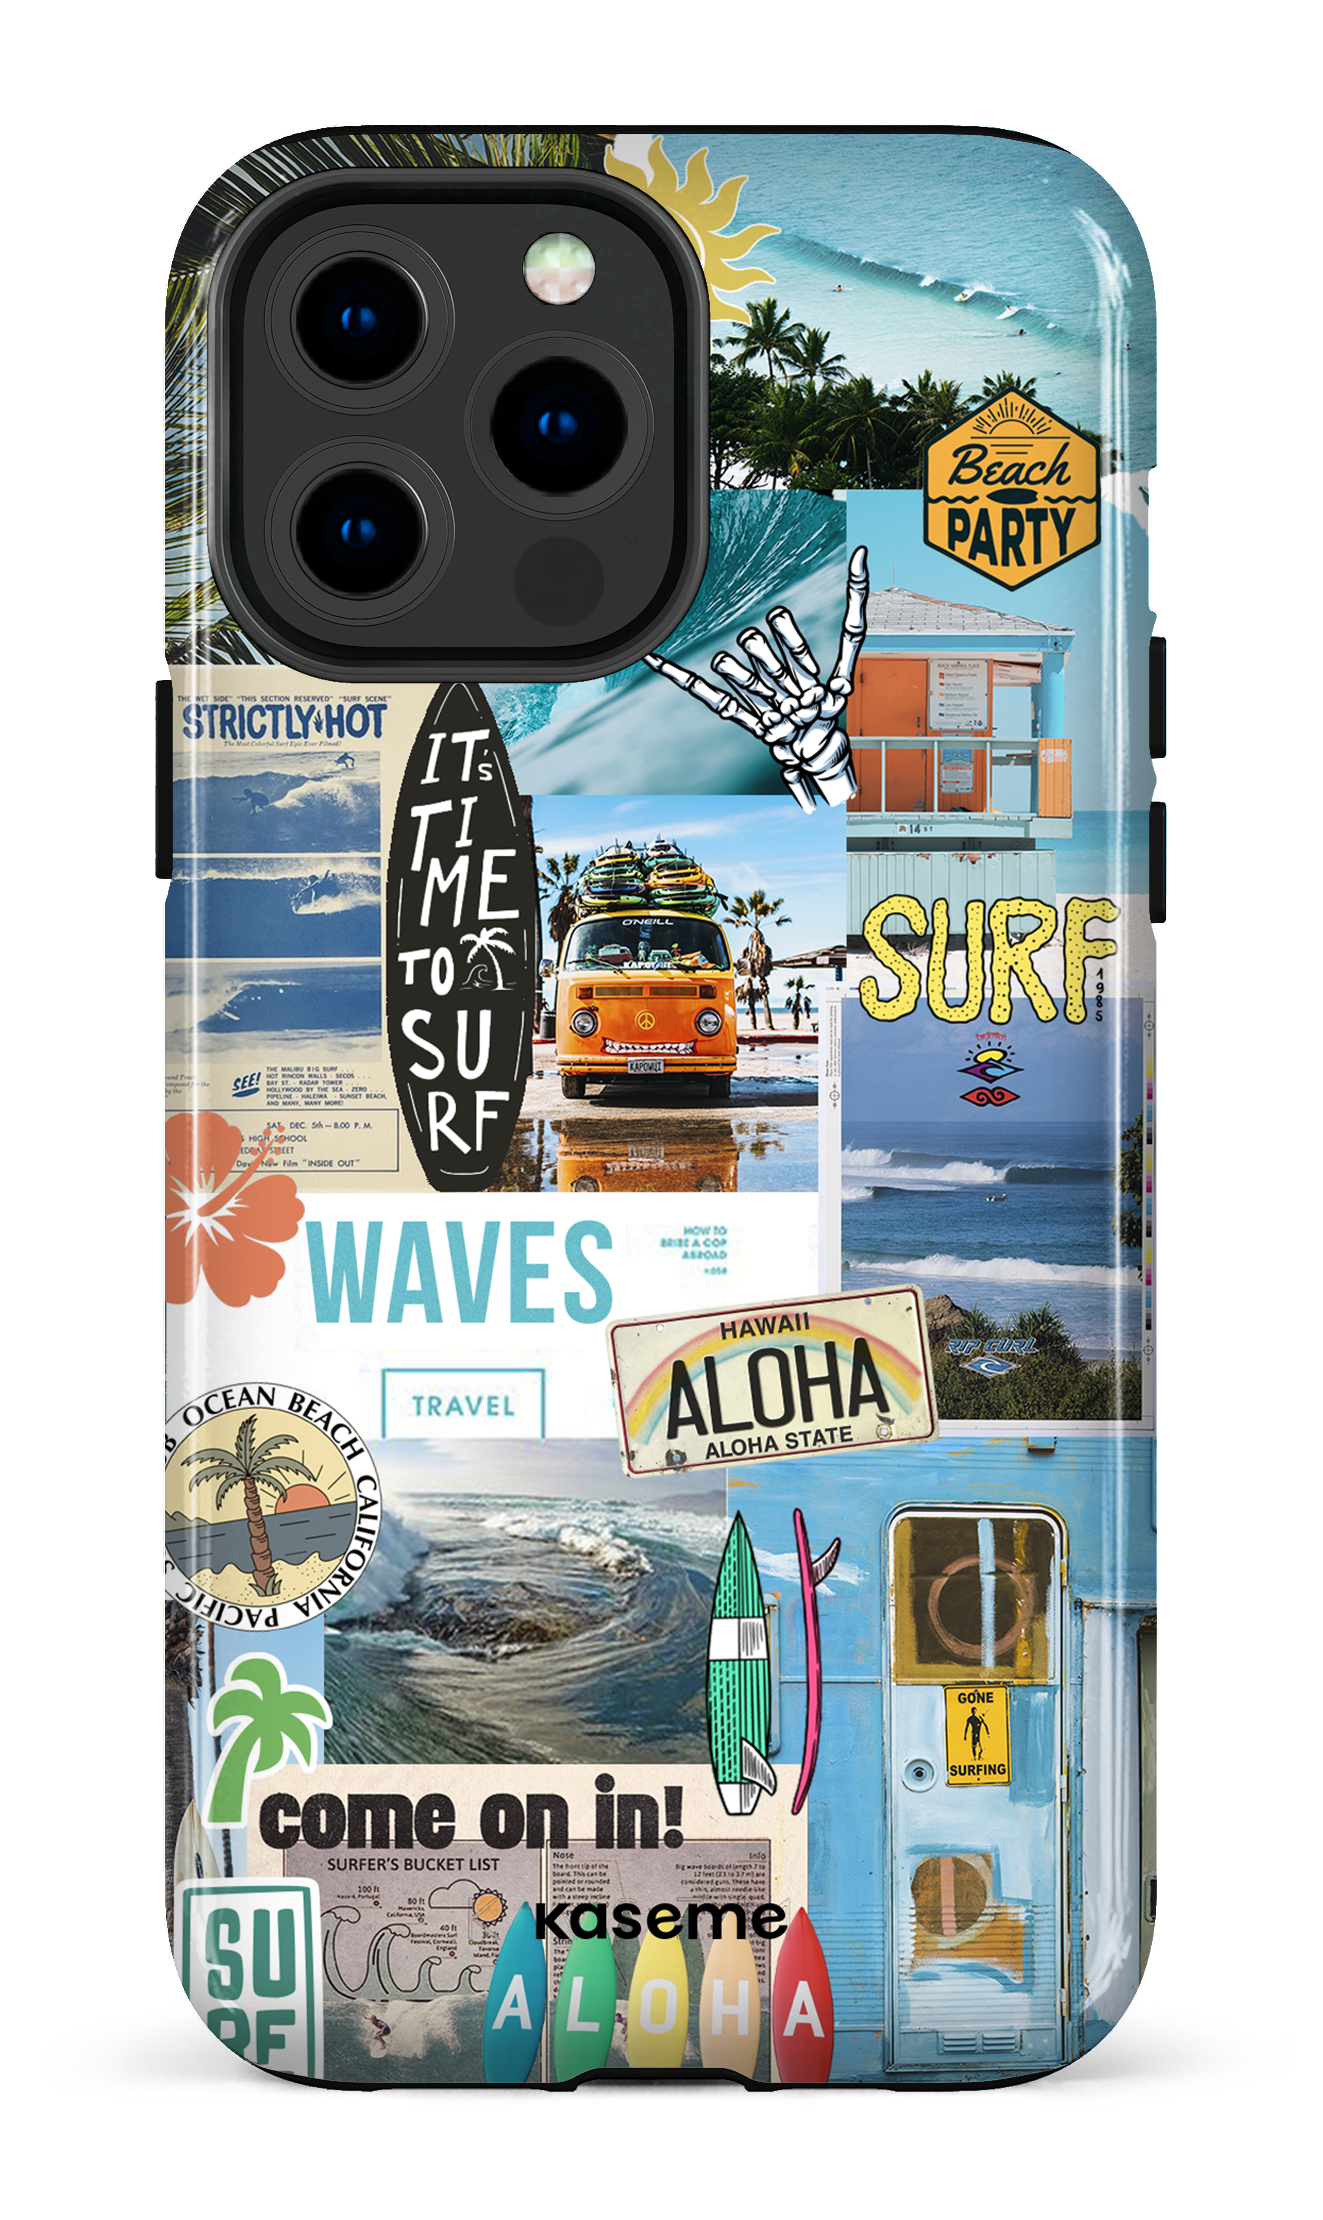 Aloha - iPhone 13 Pro Max